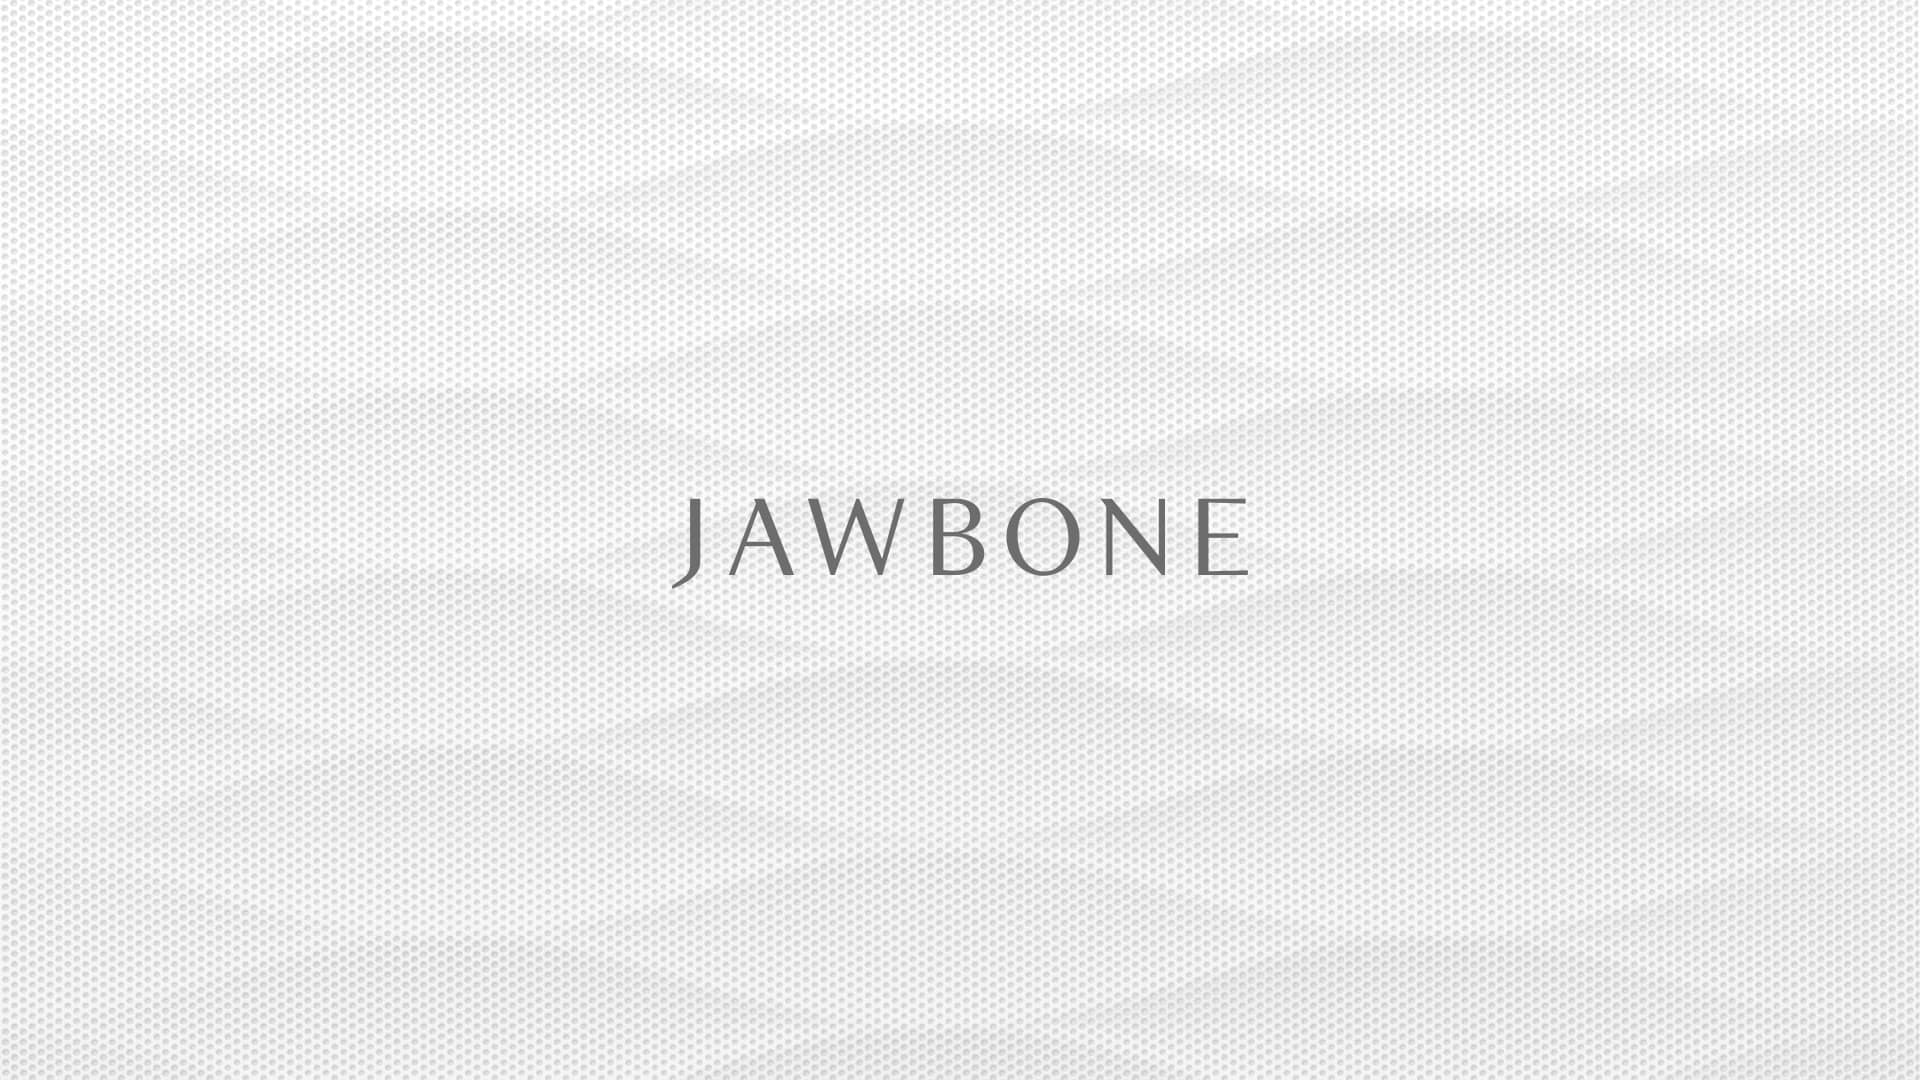 Jawbone Early Development Slide 1